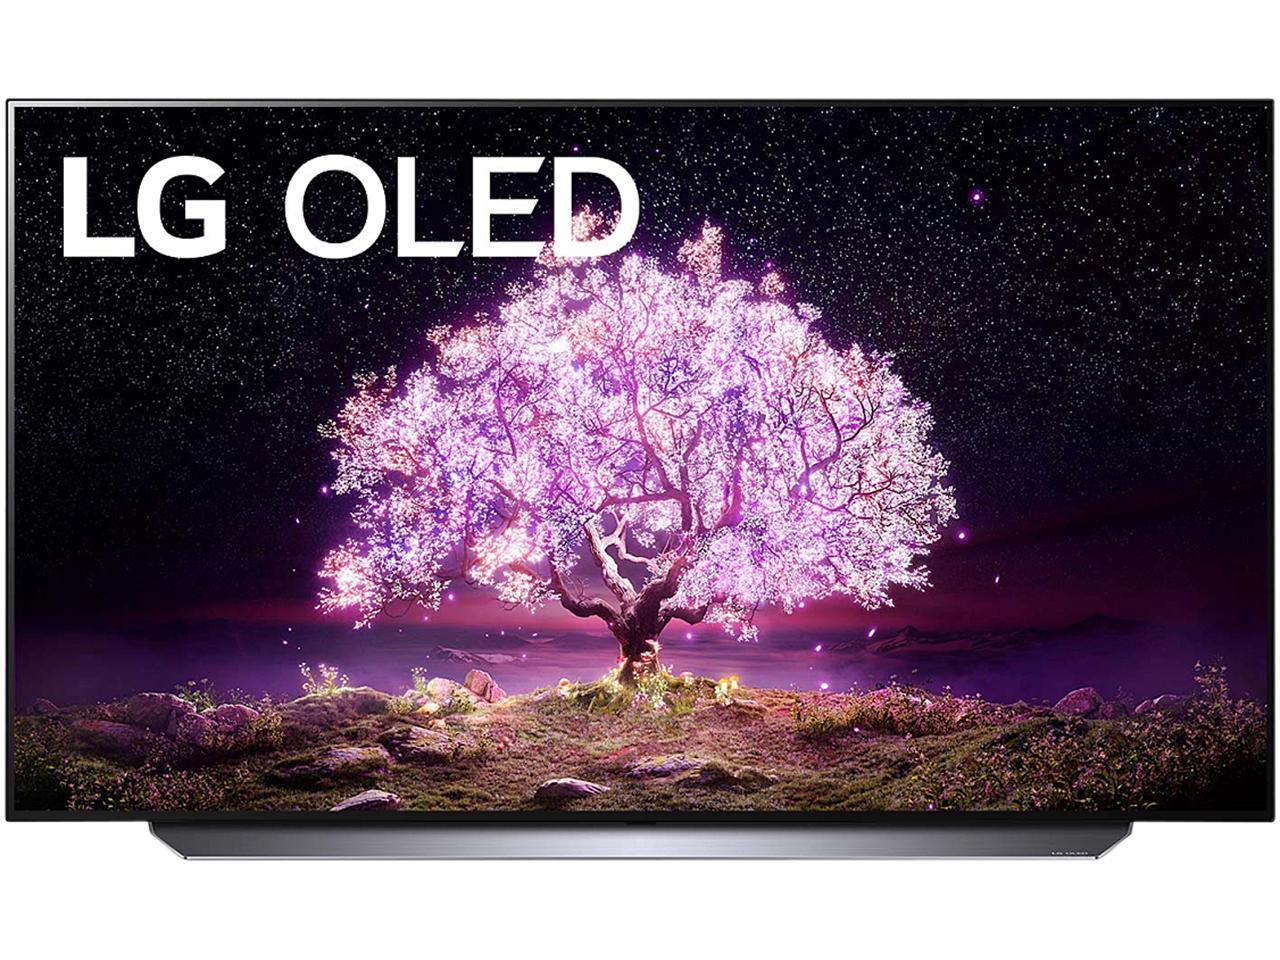 LG 48" OLED48C1PUB 4K Smart OLED TV + $25 VISA GC + 4 Year Warranty w/ Burn in Coverage $1096.99 + FS